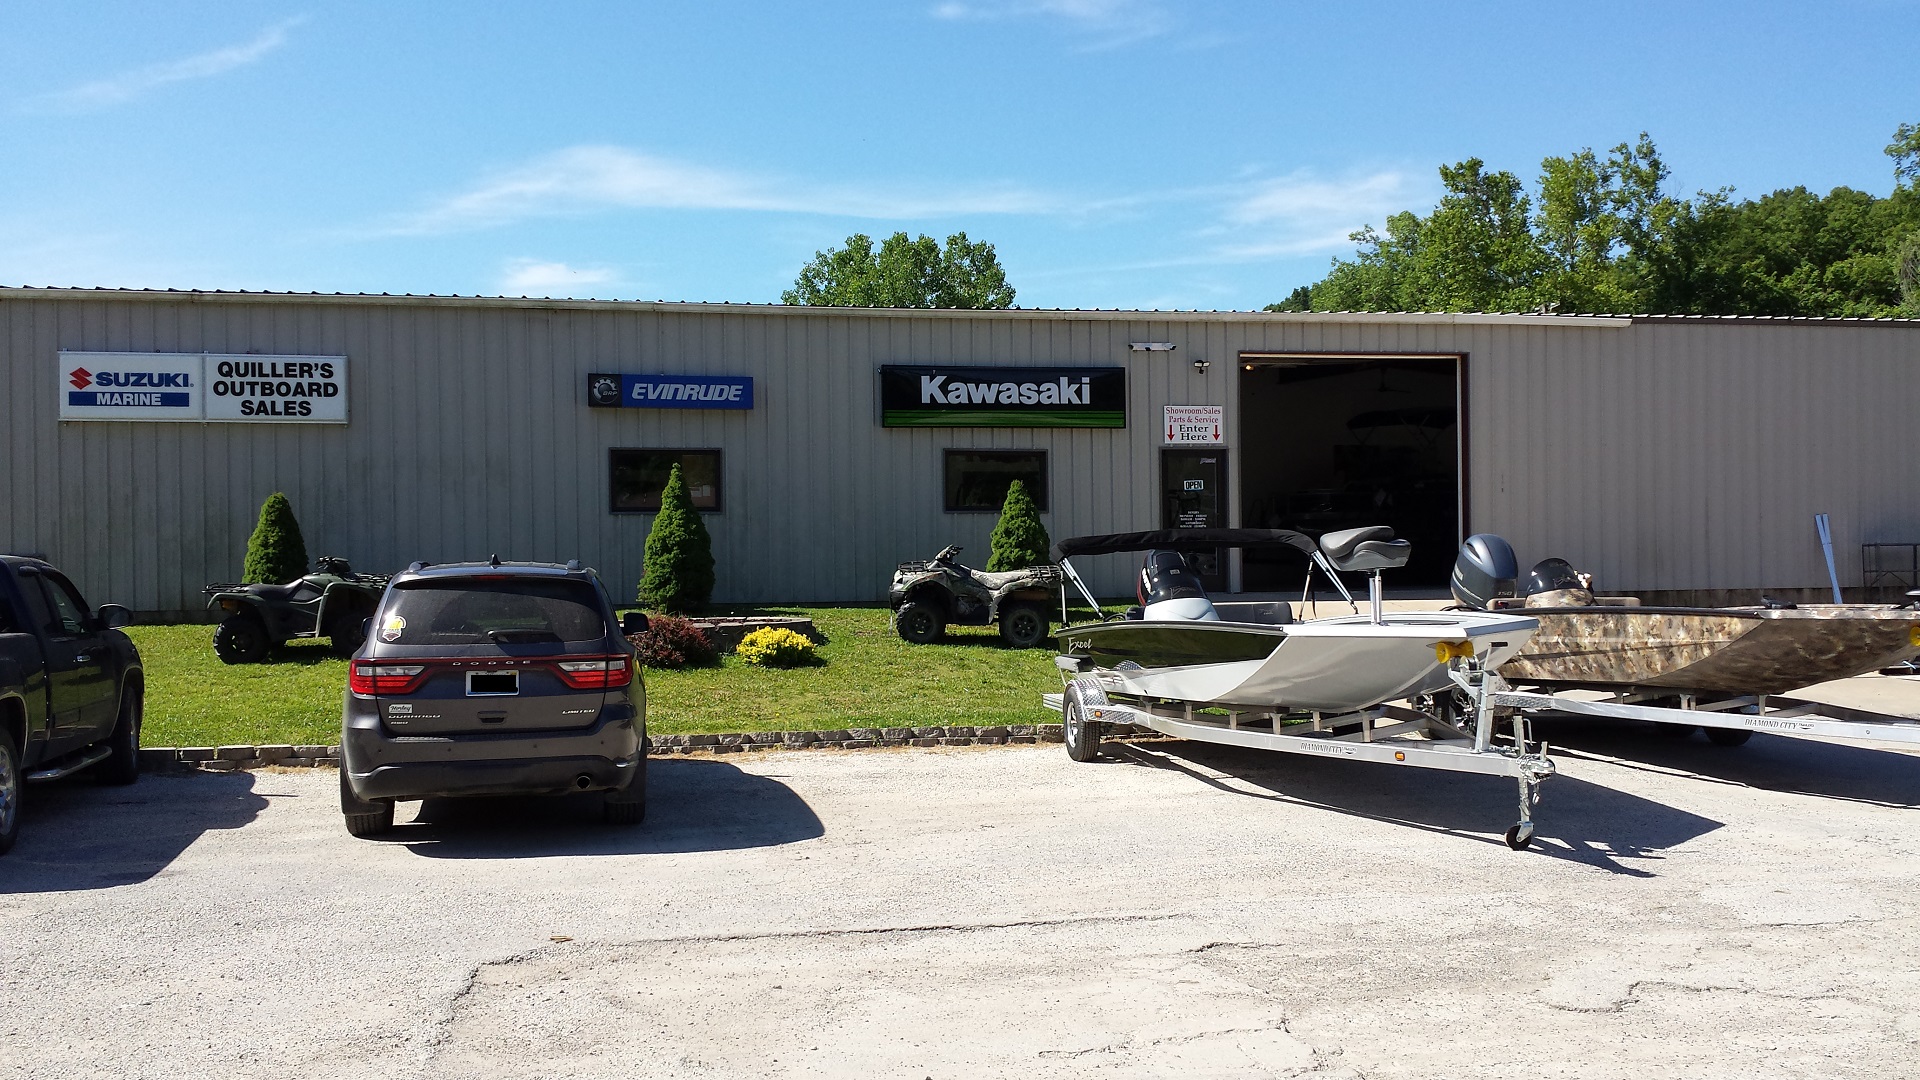 Kawasaki UTV for sale in Quiller's Outboard, Hardin, Illinois